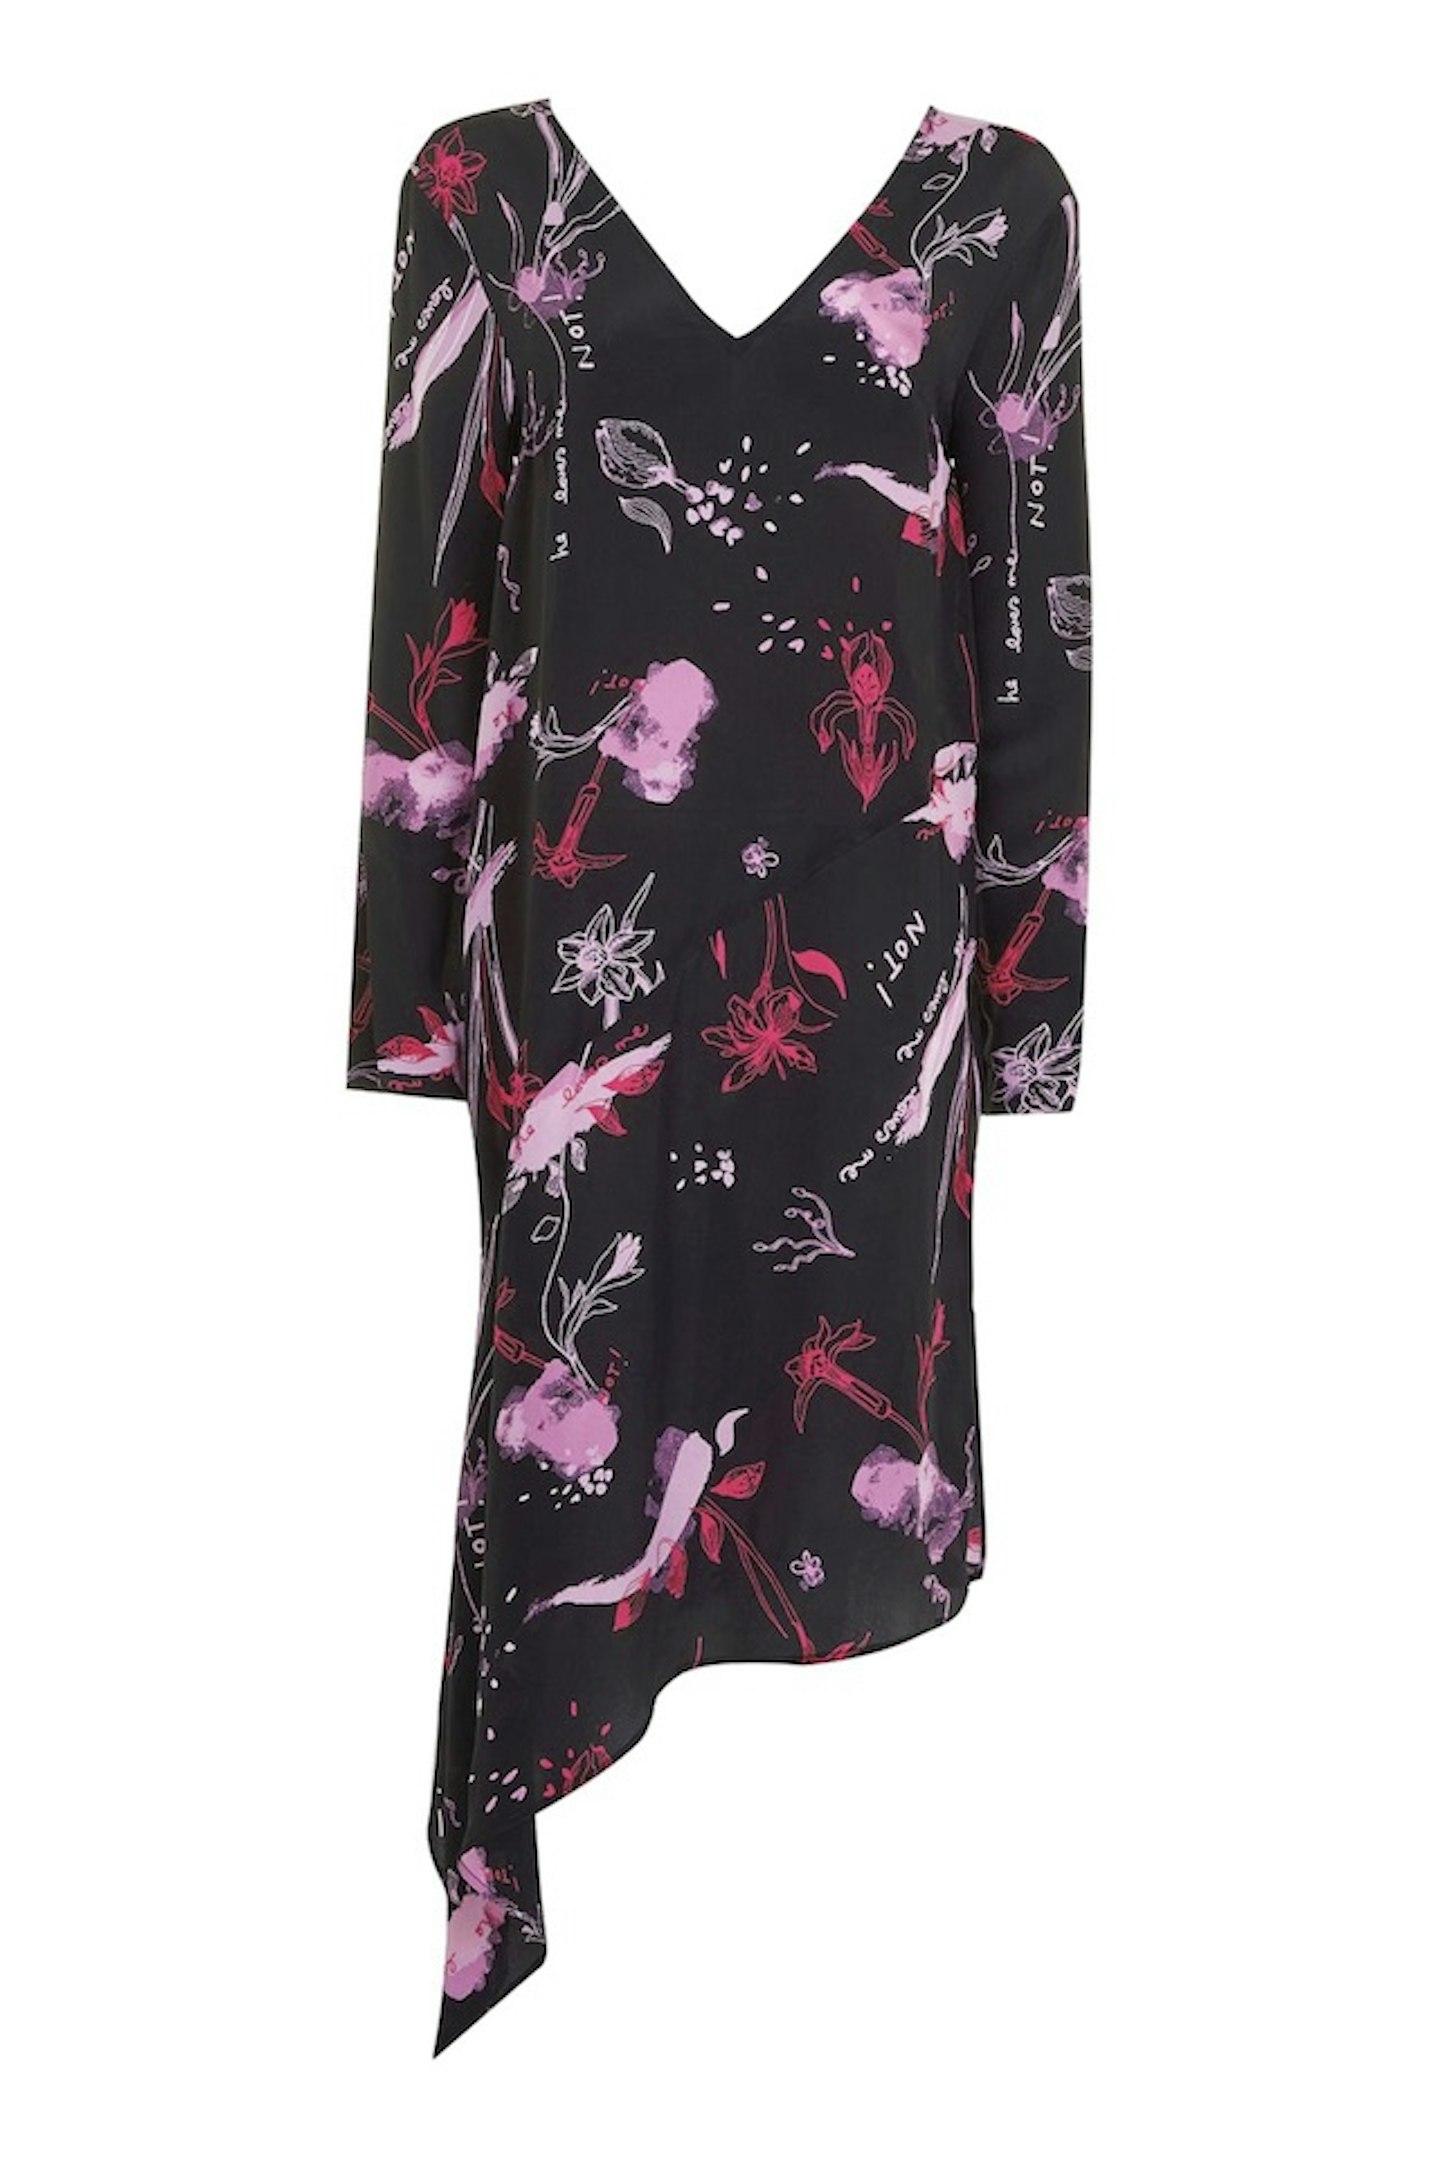 Topshop boutique long-sleeved floral dress